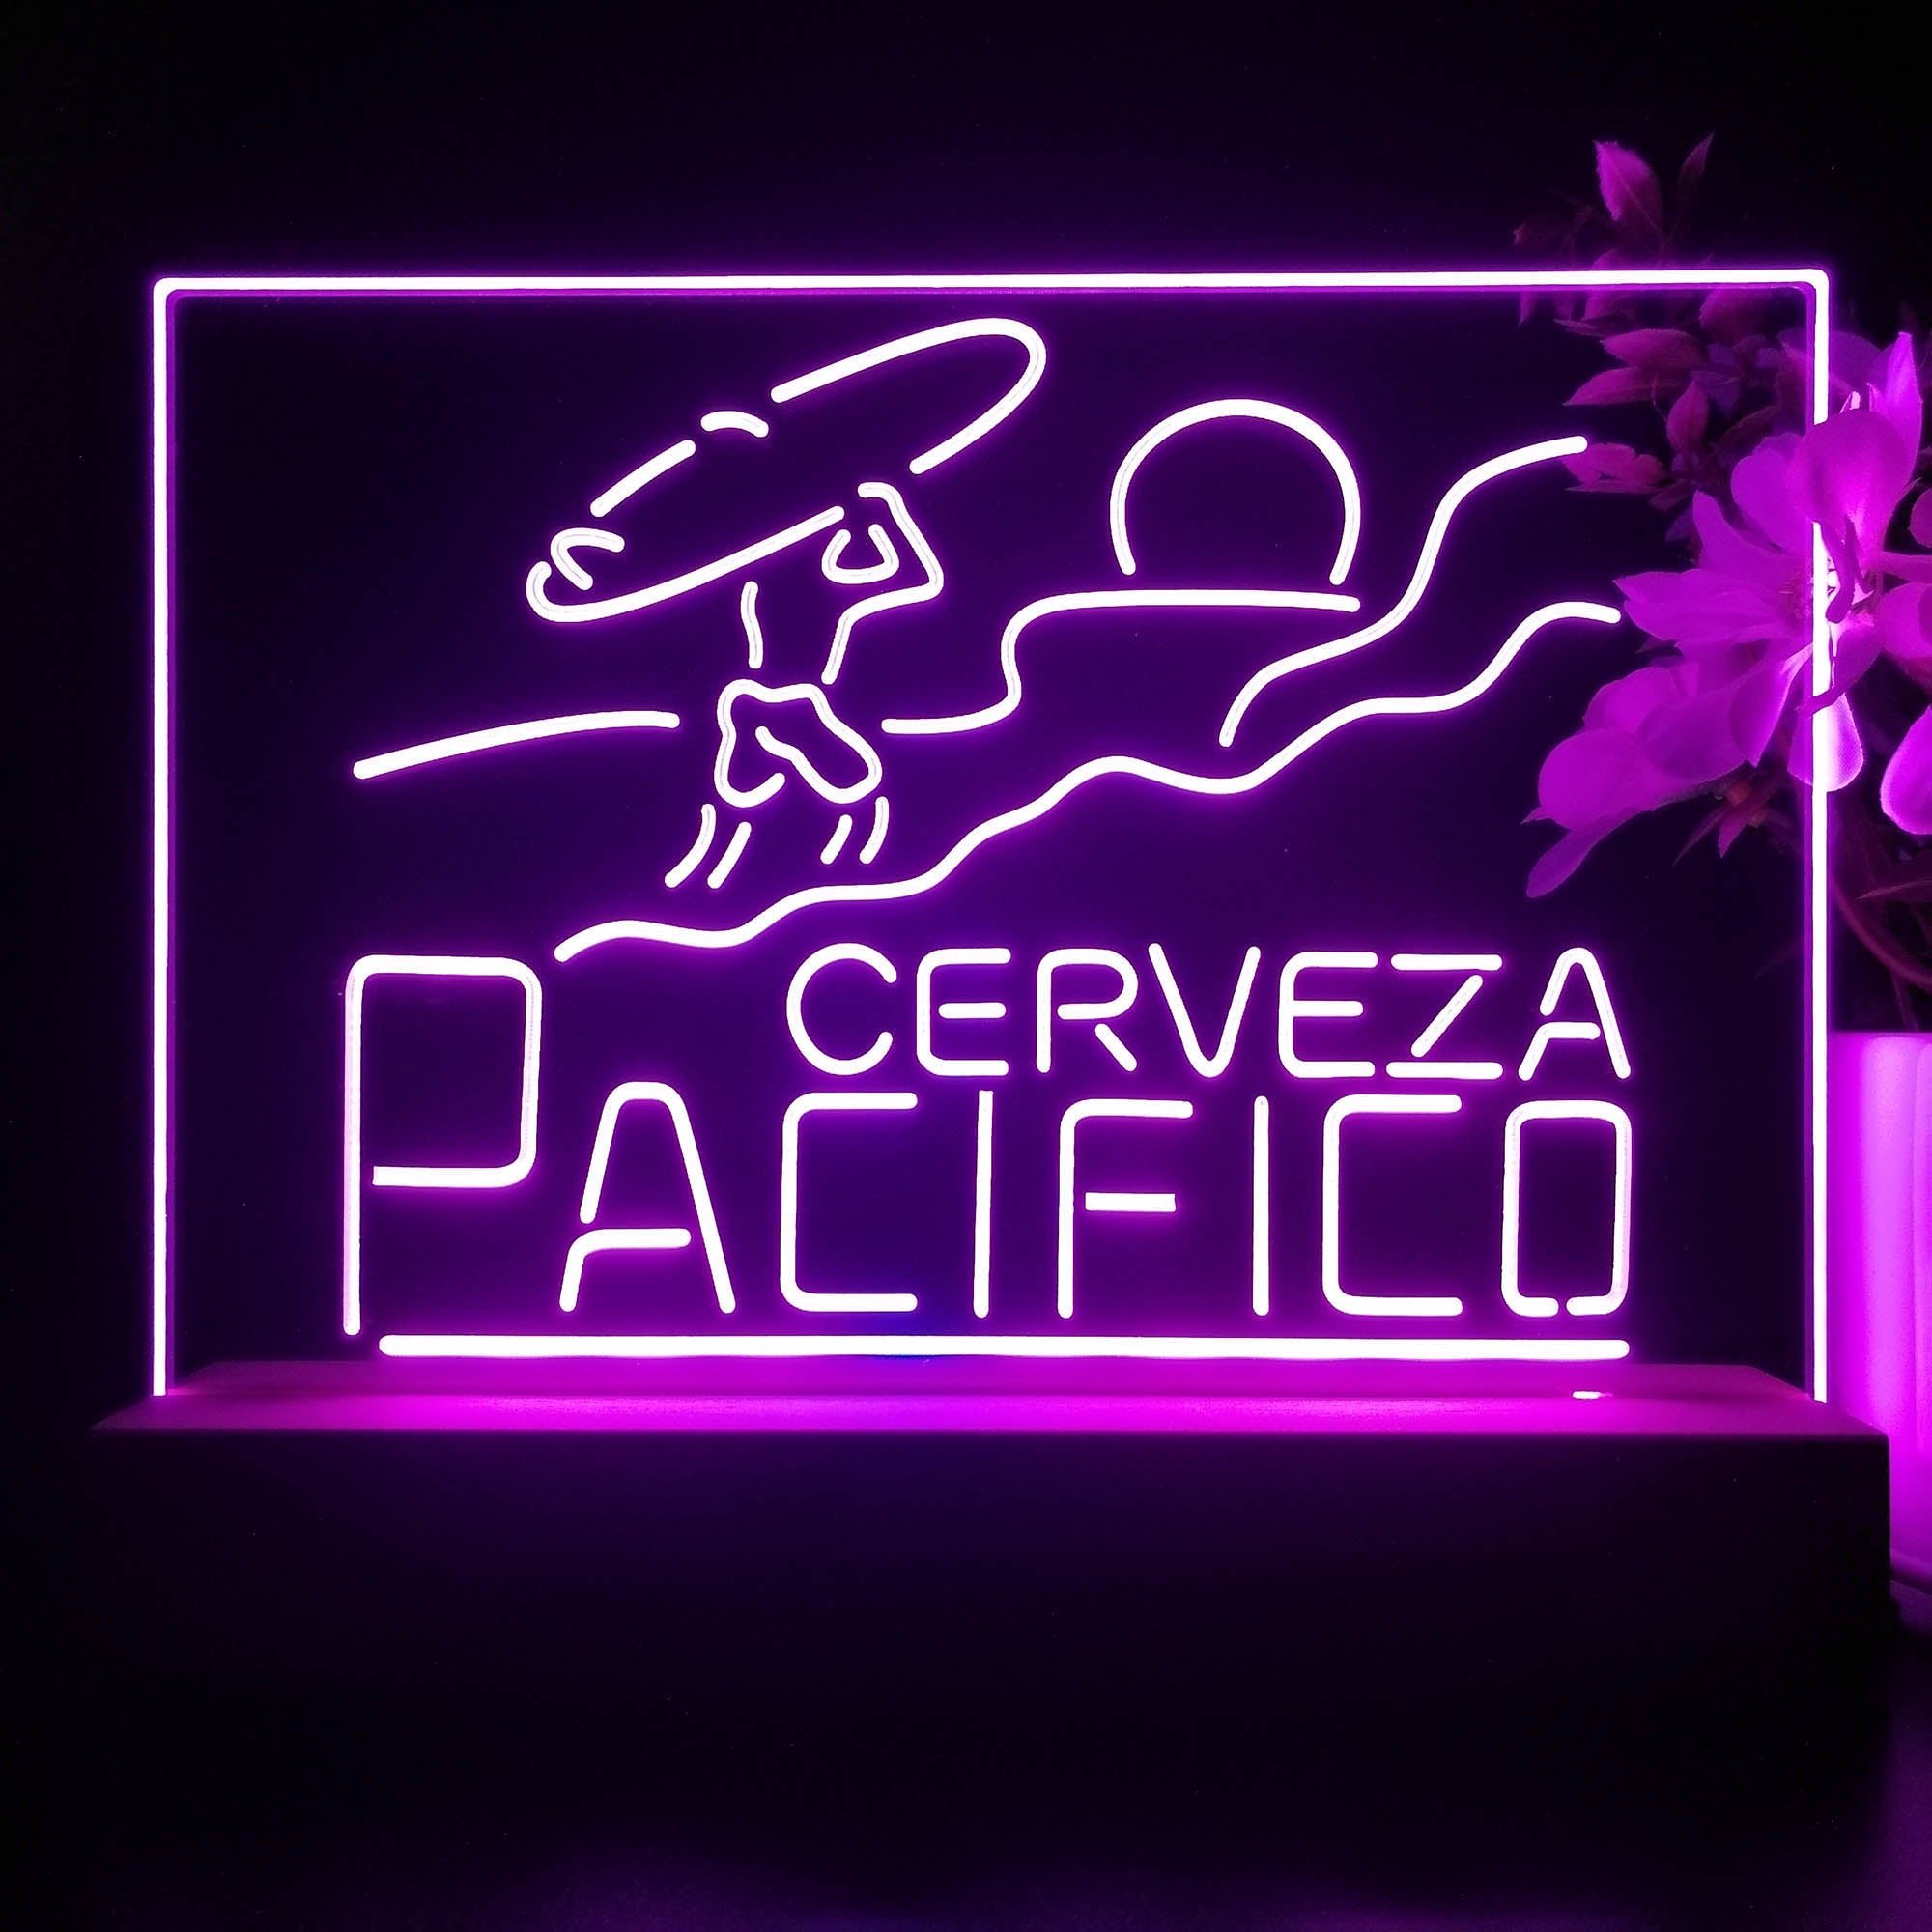 Pacifico Clara Mexican Cerveza Neon Sign Pub Bar Lamp